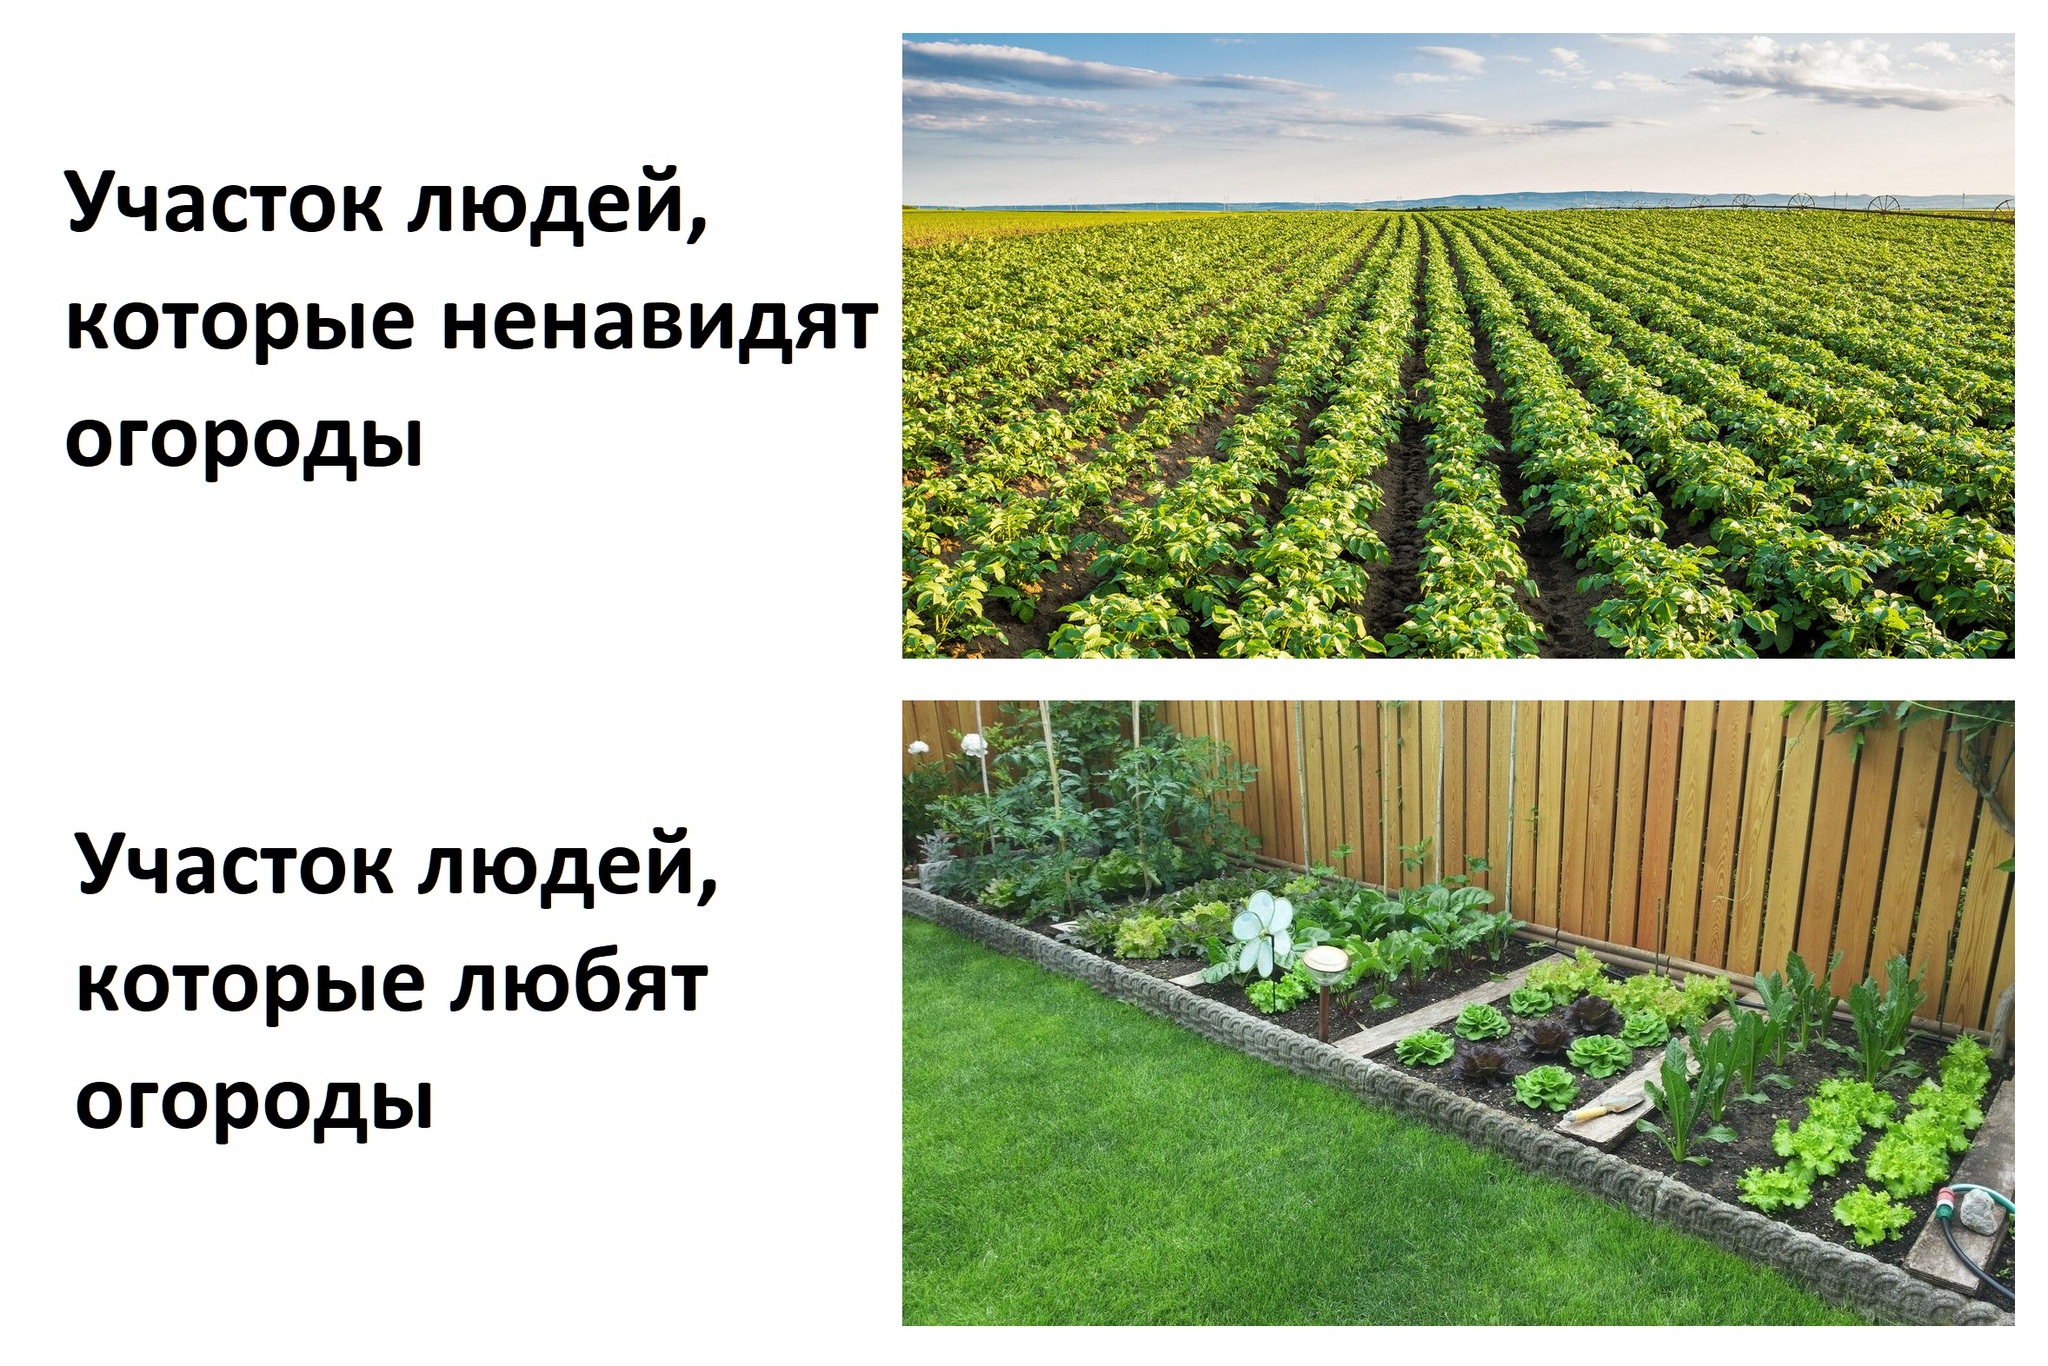 Post #11559260 - Humor, Sad humor, Garden, Garden, Dacha, Village, Gardening, Village, Potato, Сельское хозяйство, Nature, Picture with text